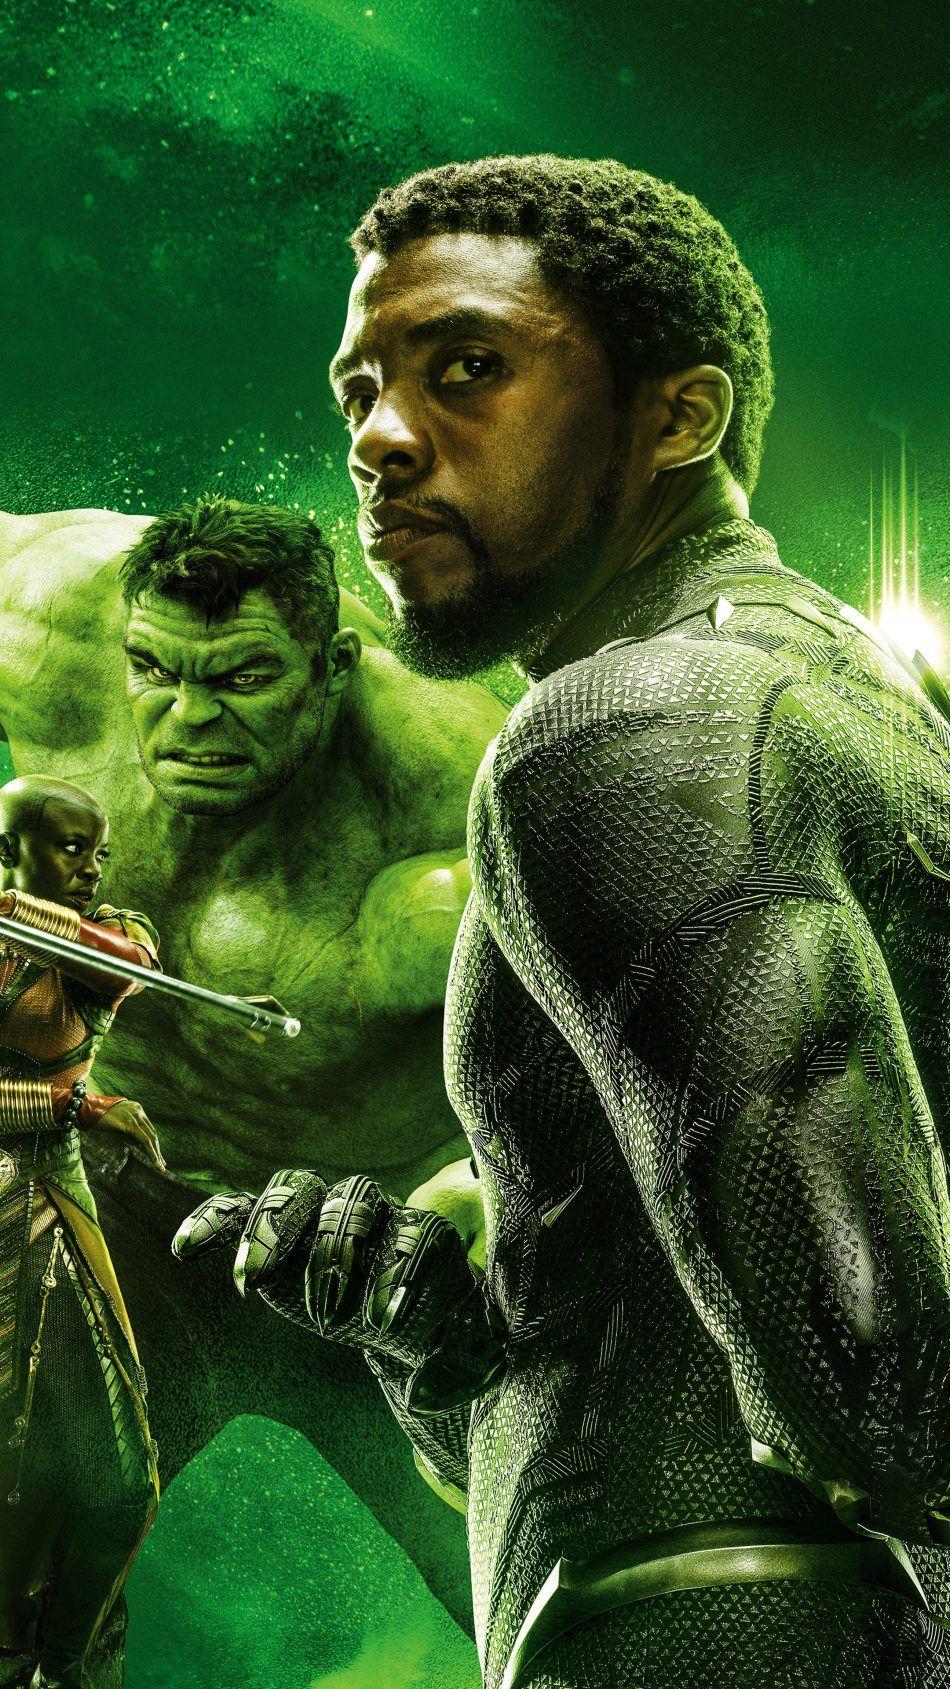 Hulk & Black Panther In Avengers Endgame 4K Ultra HD Mobile Wallpaper. Black panther marvel, Avengers, Black panther